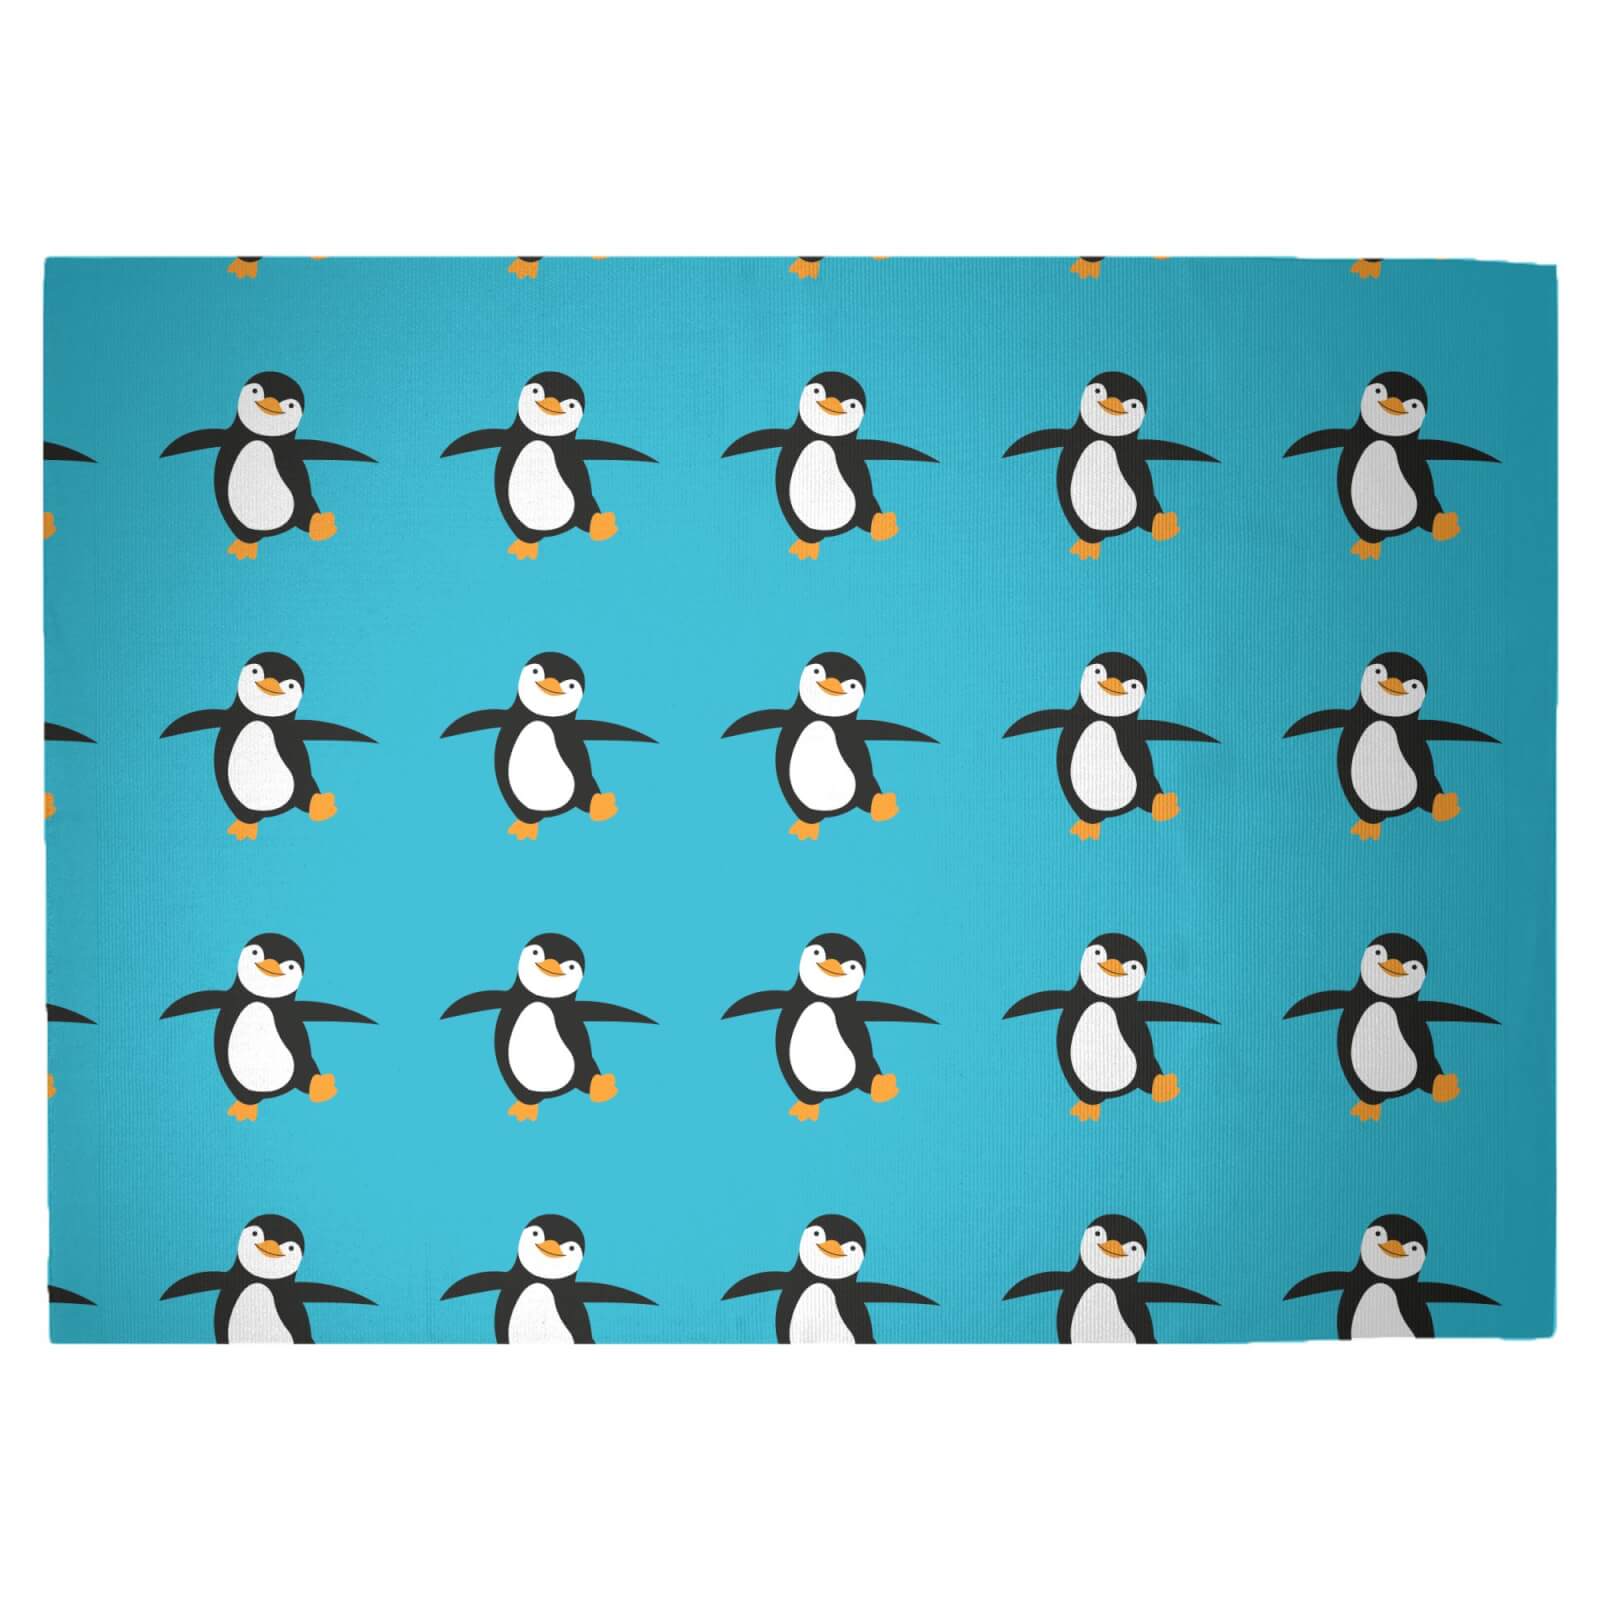 Dancing Penguin Woven Rug - Large